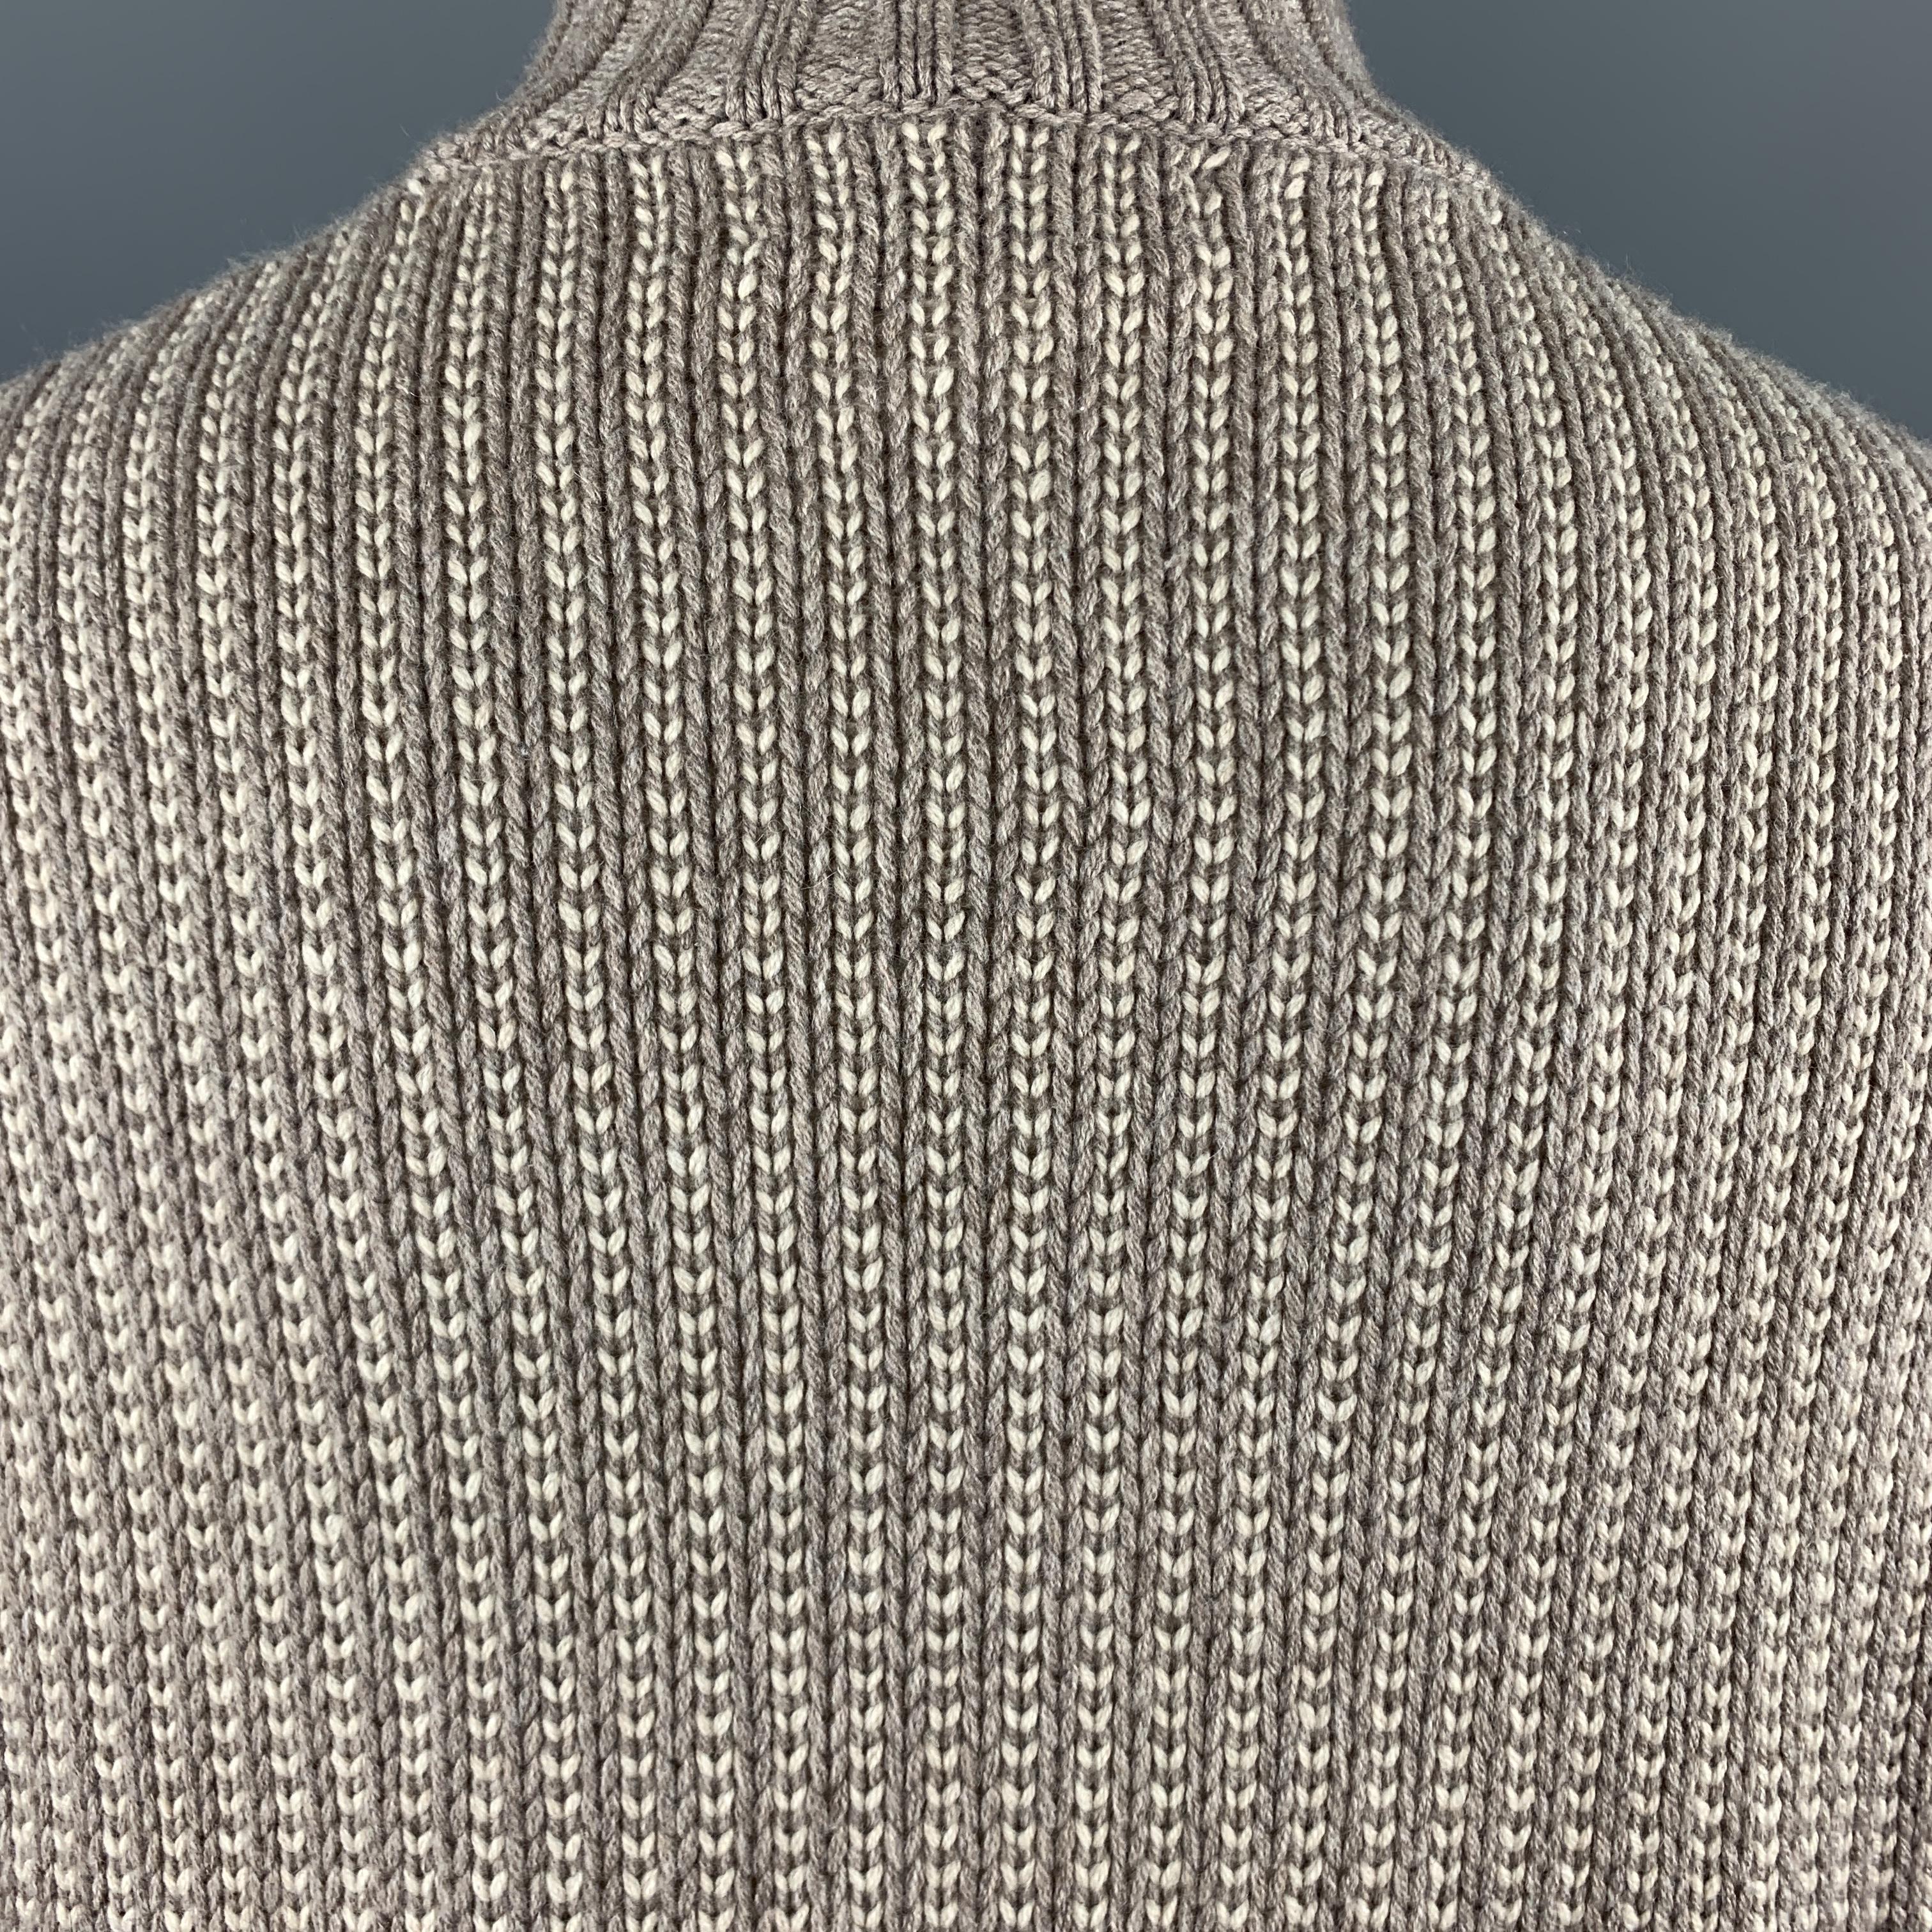 Men's BRUNELLO CUCINELLI Size L Taupe & Cream Striped Wool / Cashmere Zip Up Cardigan